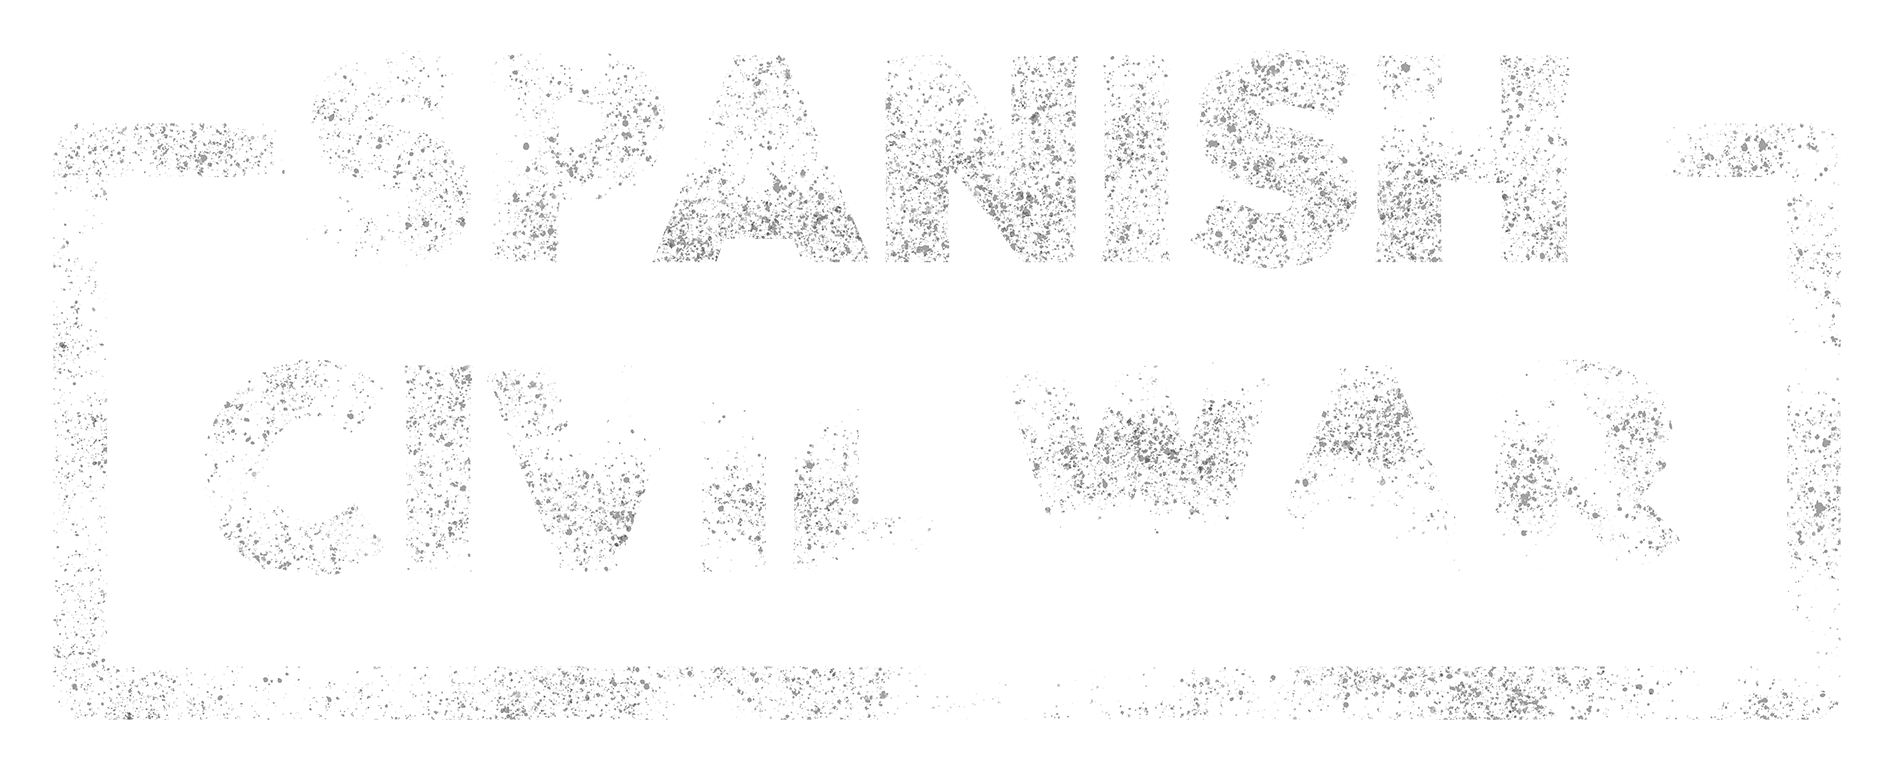 Spanish Civil War virtual museum logo